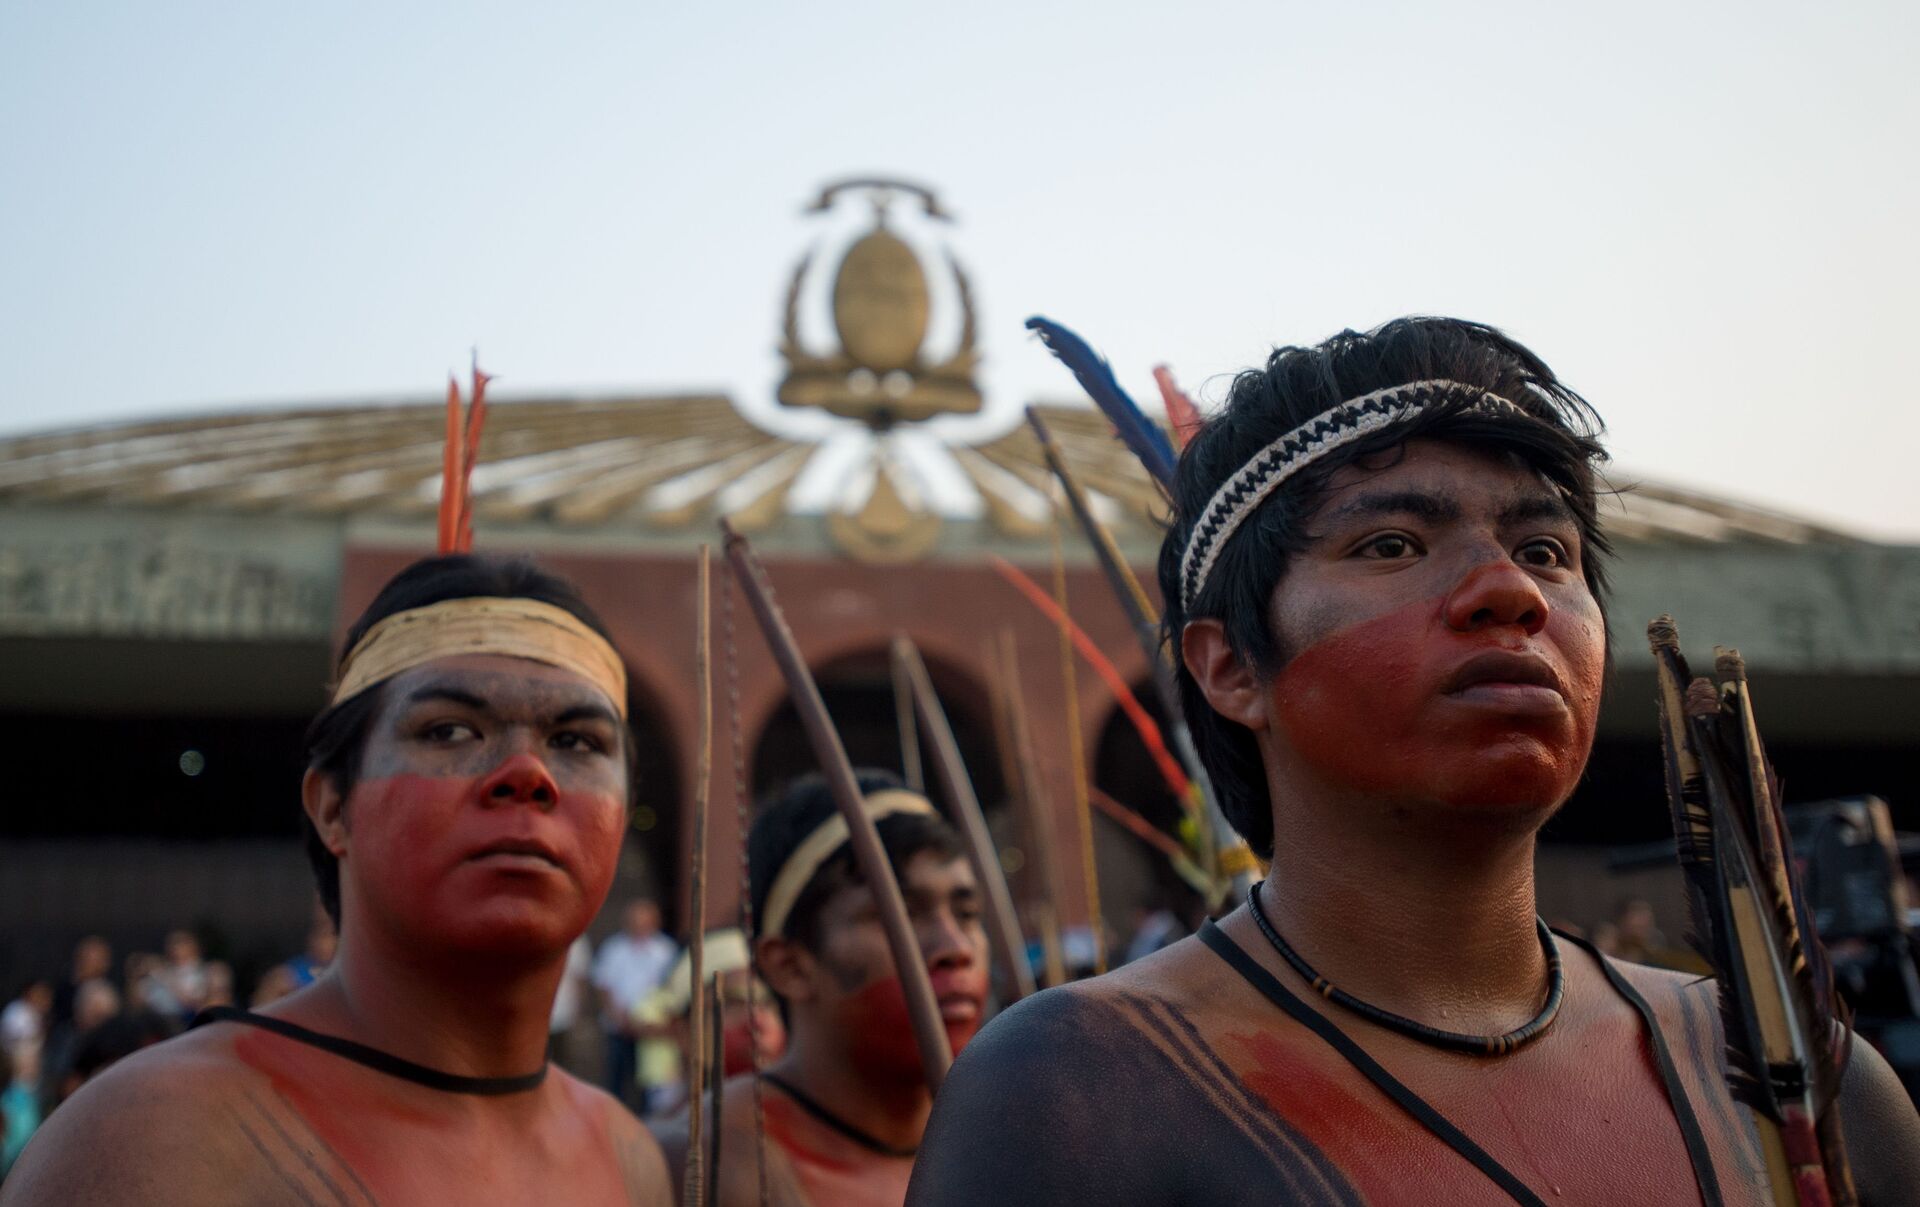 Conheça as 16 modalidades dos Jogos Mundiais dos Povos Indígenas